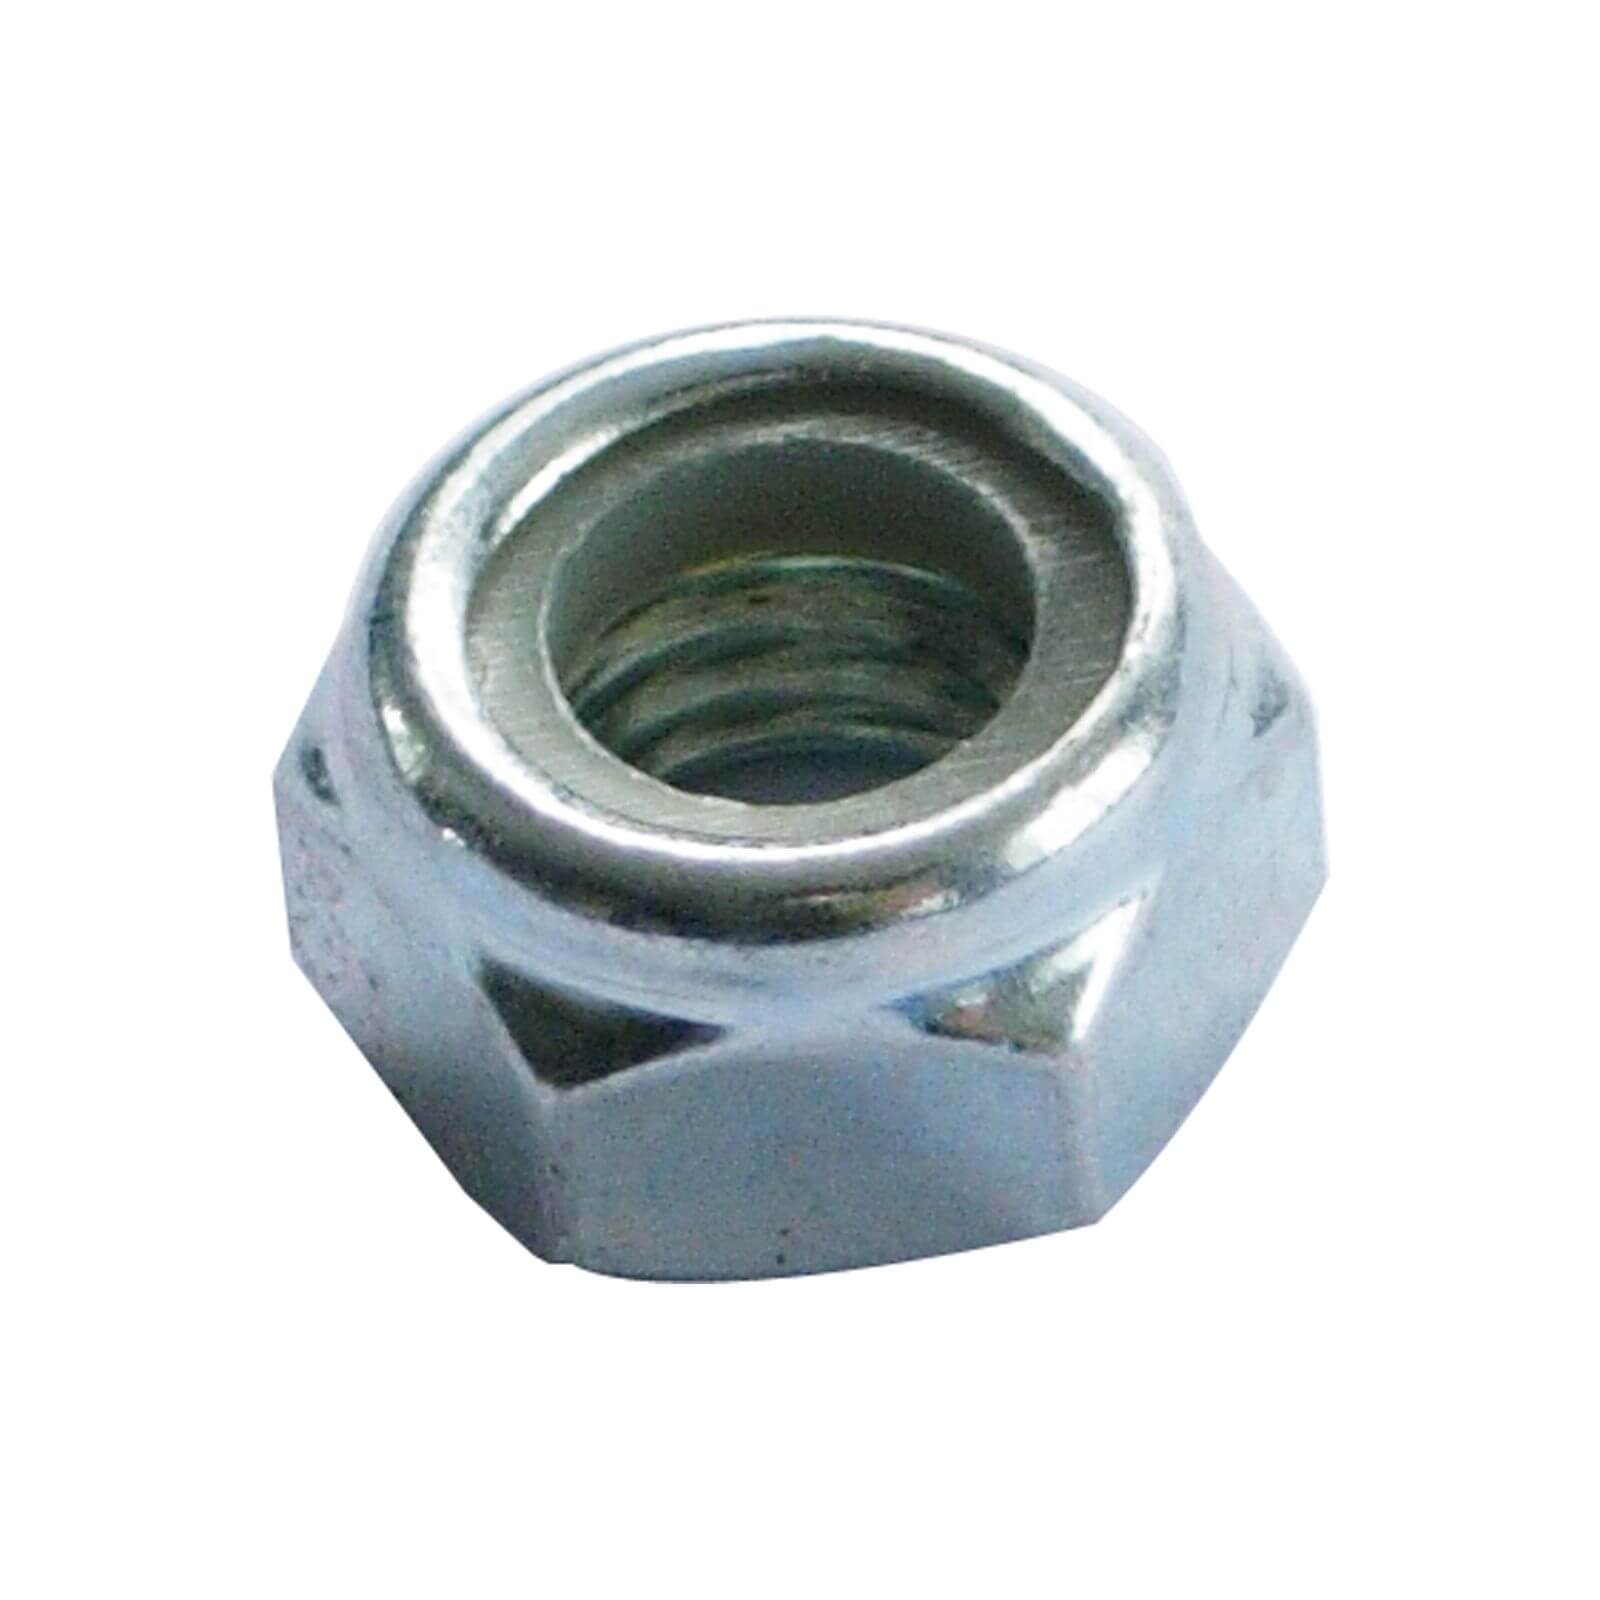 Locking Nut - Bright Zinc Plated - M8 - 10 Pack